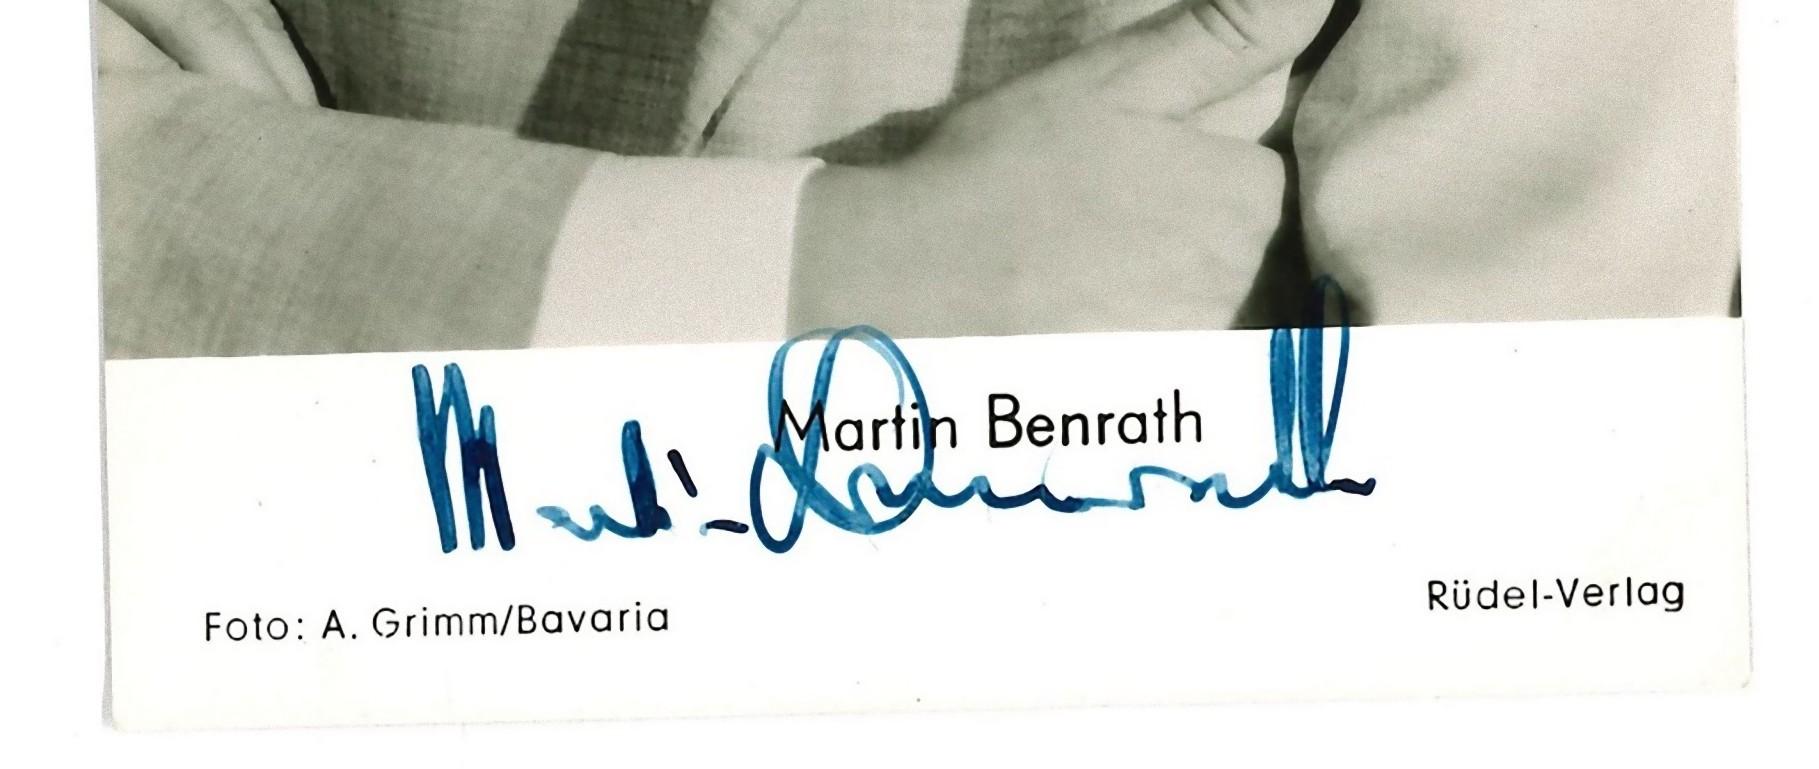 Autographed Portrait of Martin Benrath - Vintage b/w Postcard -1959 - Photograph by Unknown